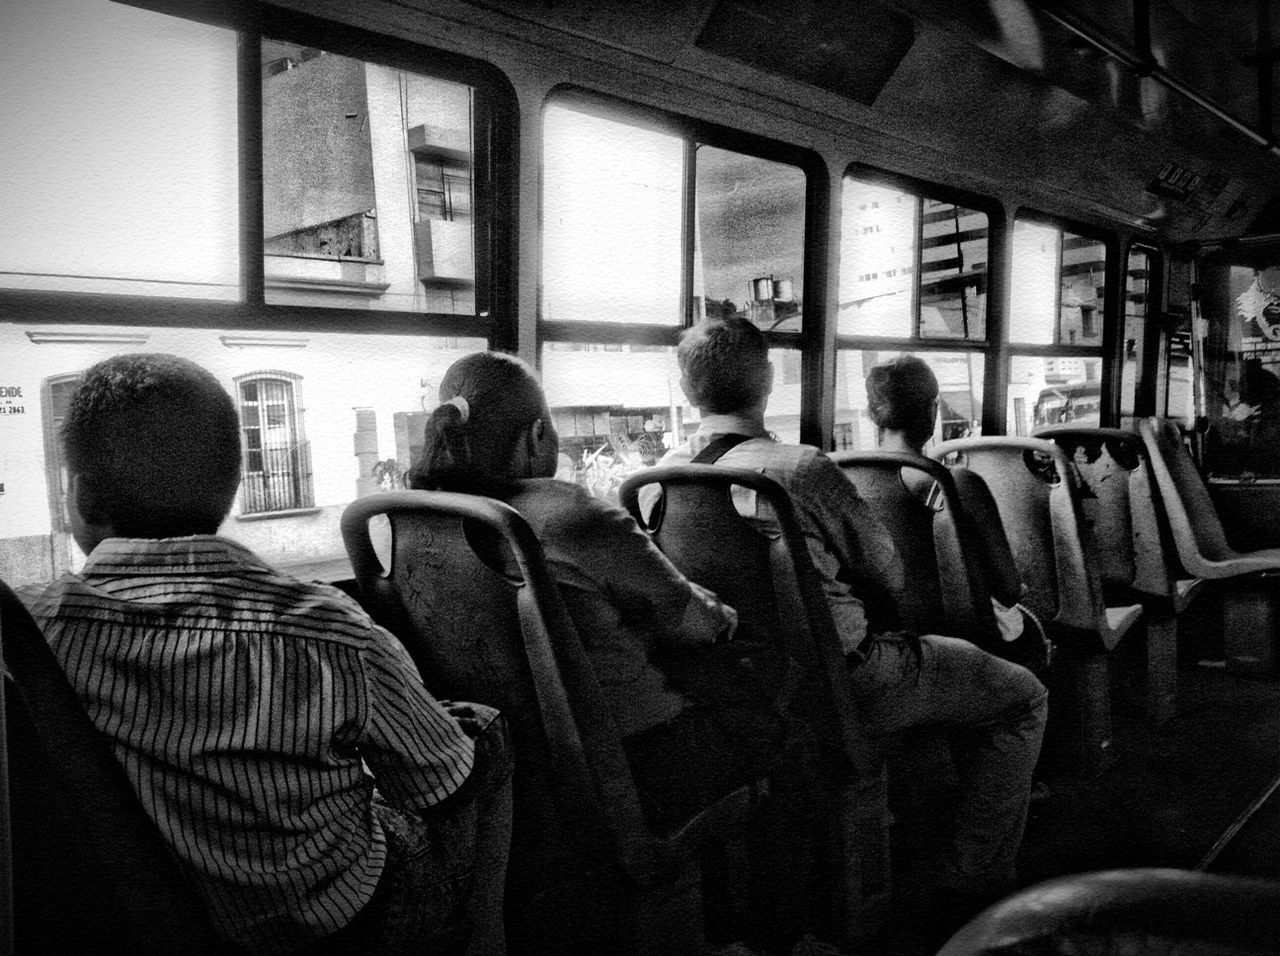 People in bus